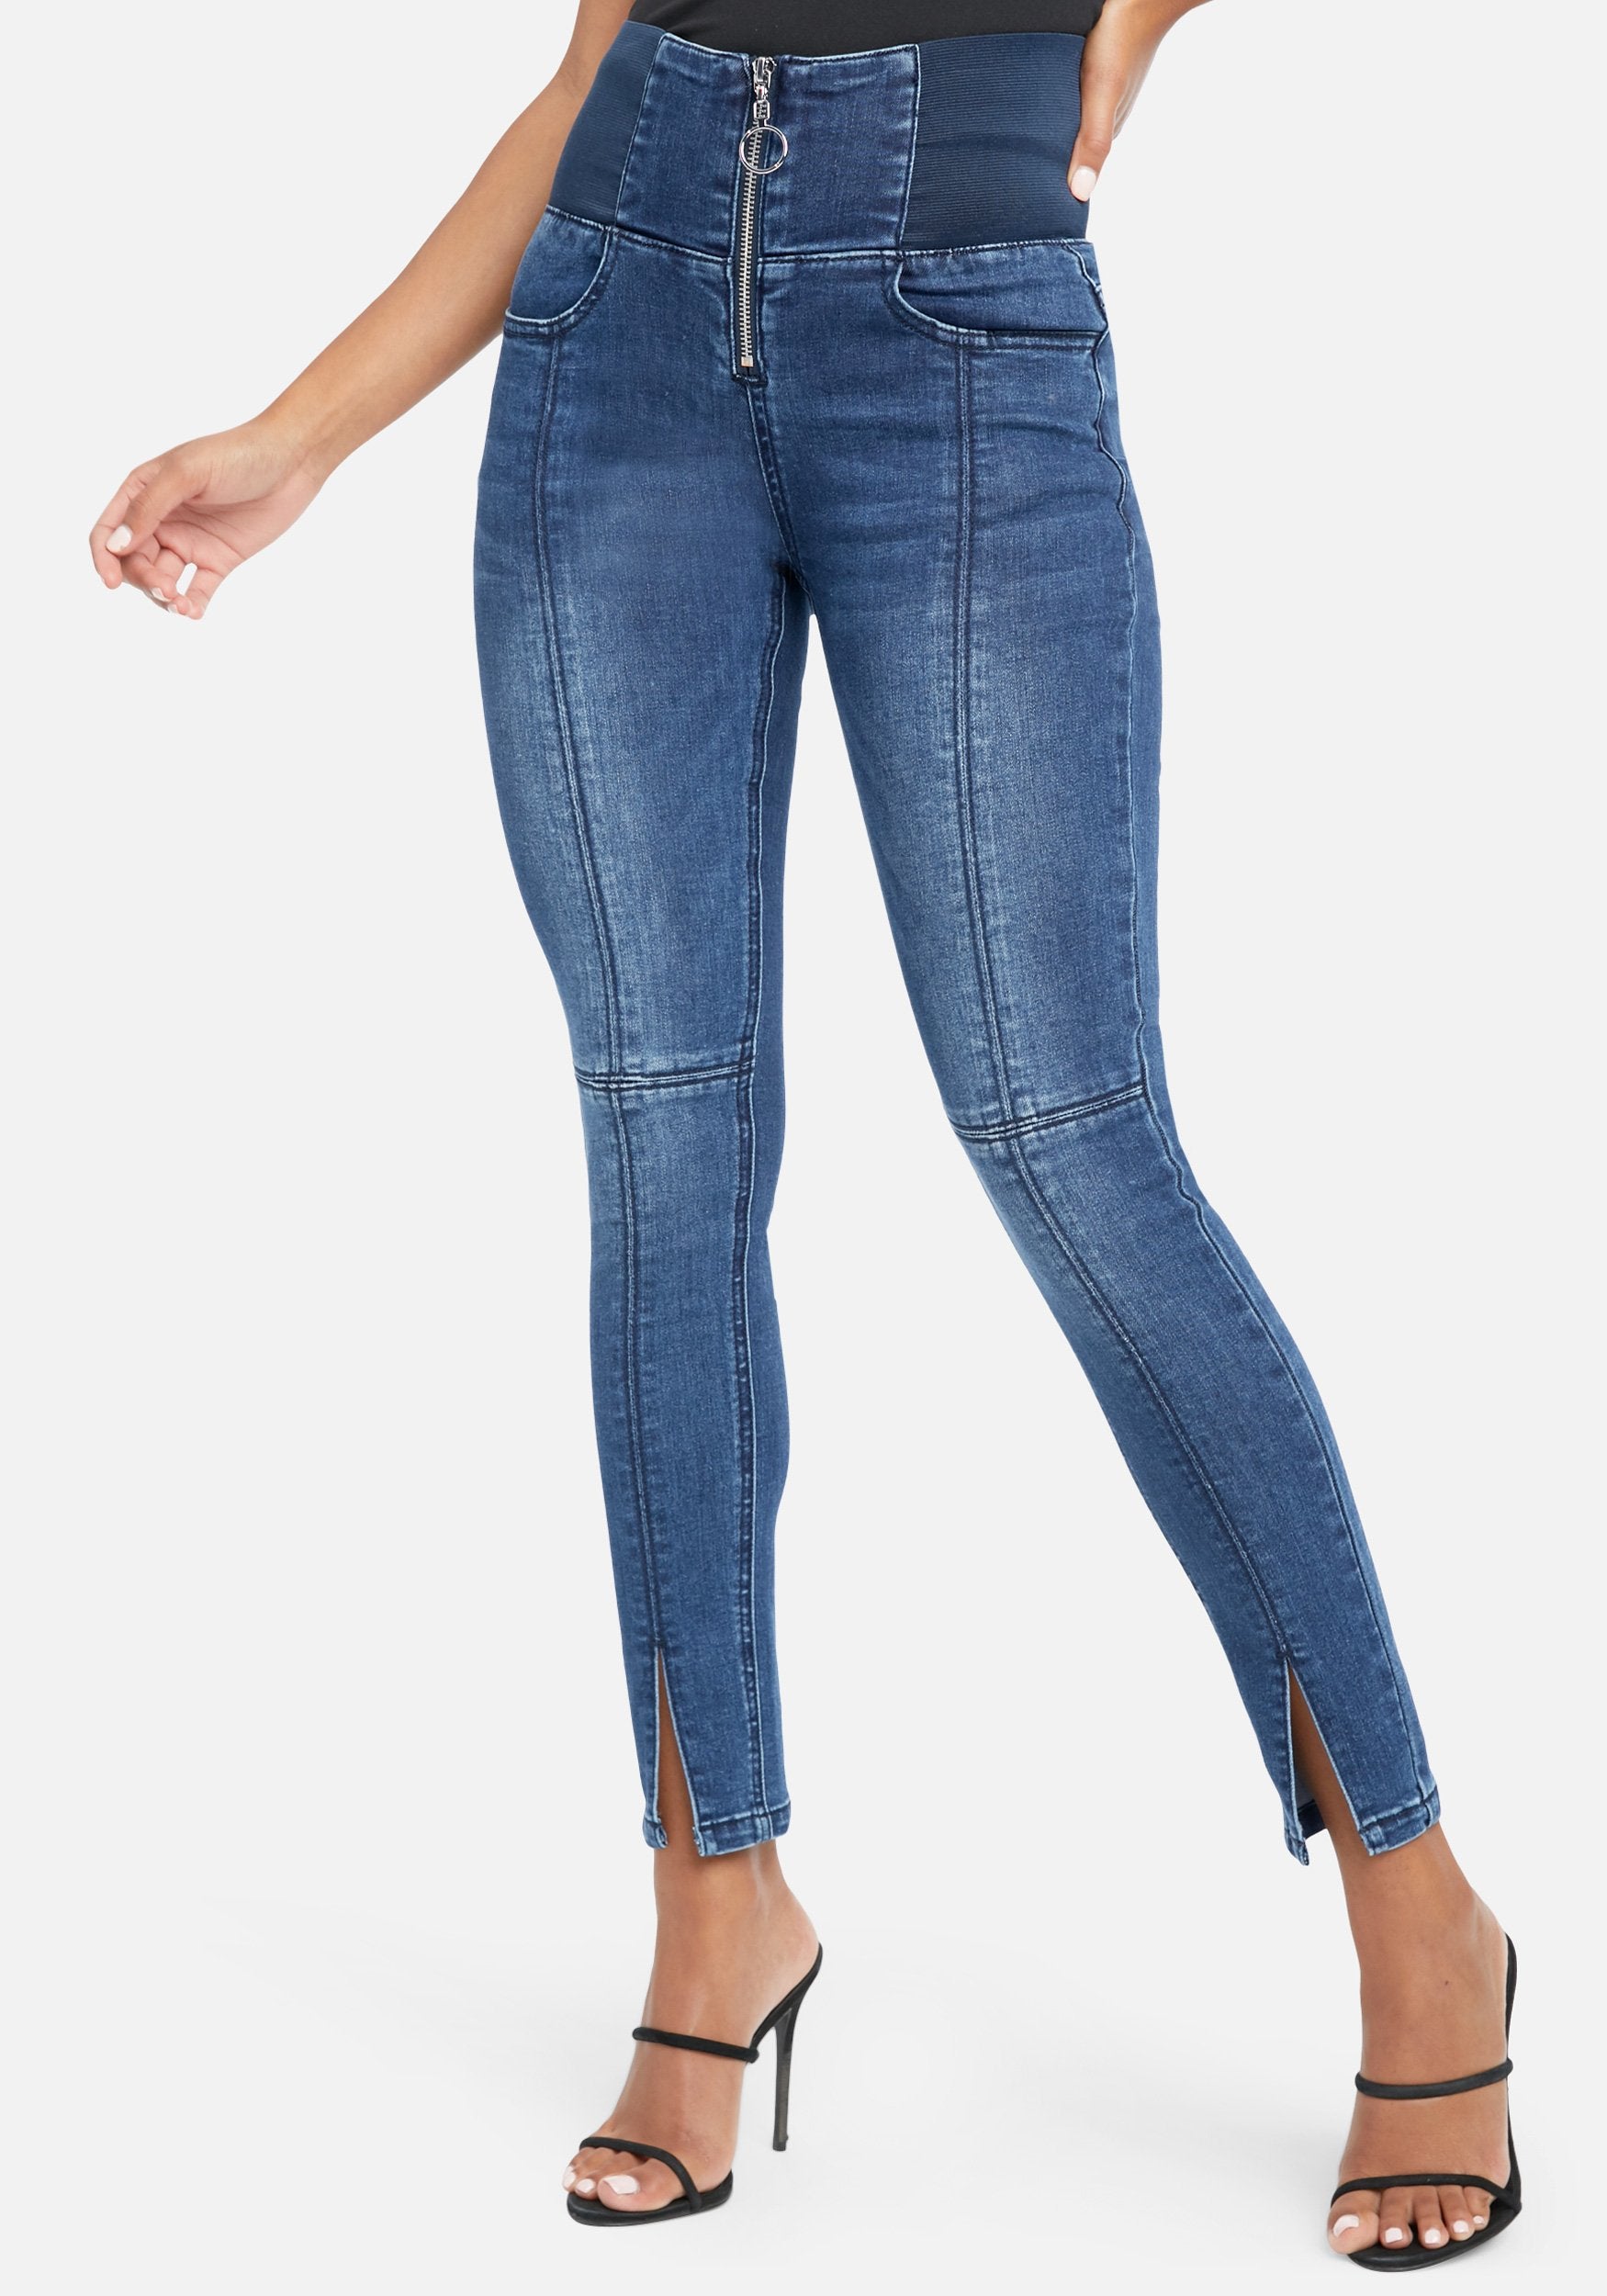 Bebe Women's Elastic Waist Band Skinny Jeans, Size 29 in Med Indigo Wash Cotton/Spandex/Viscose